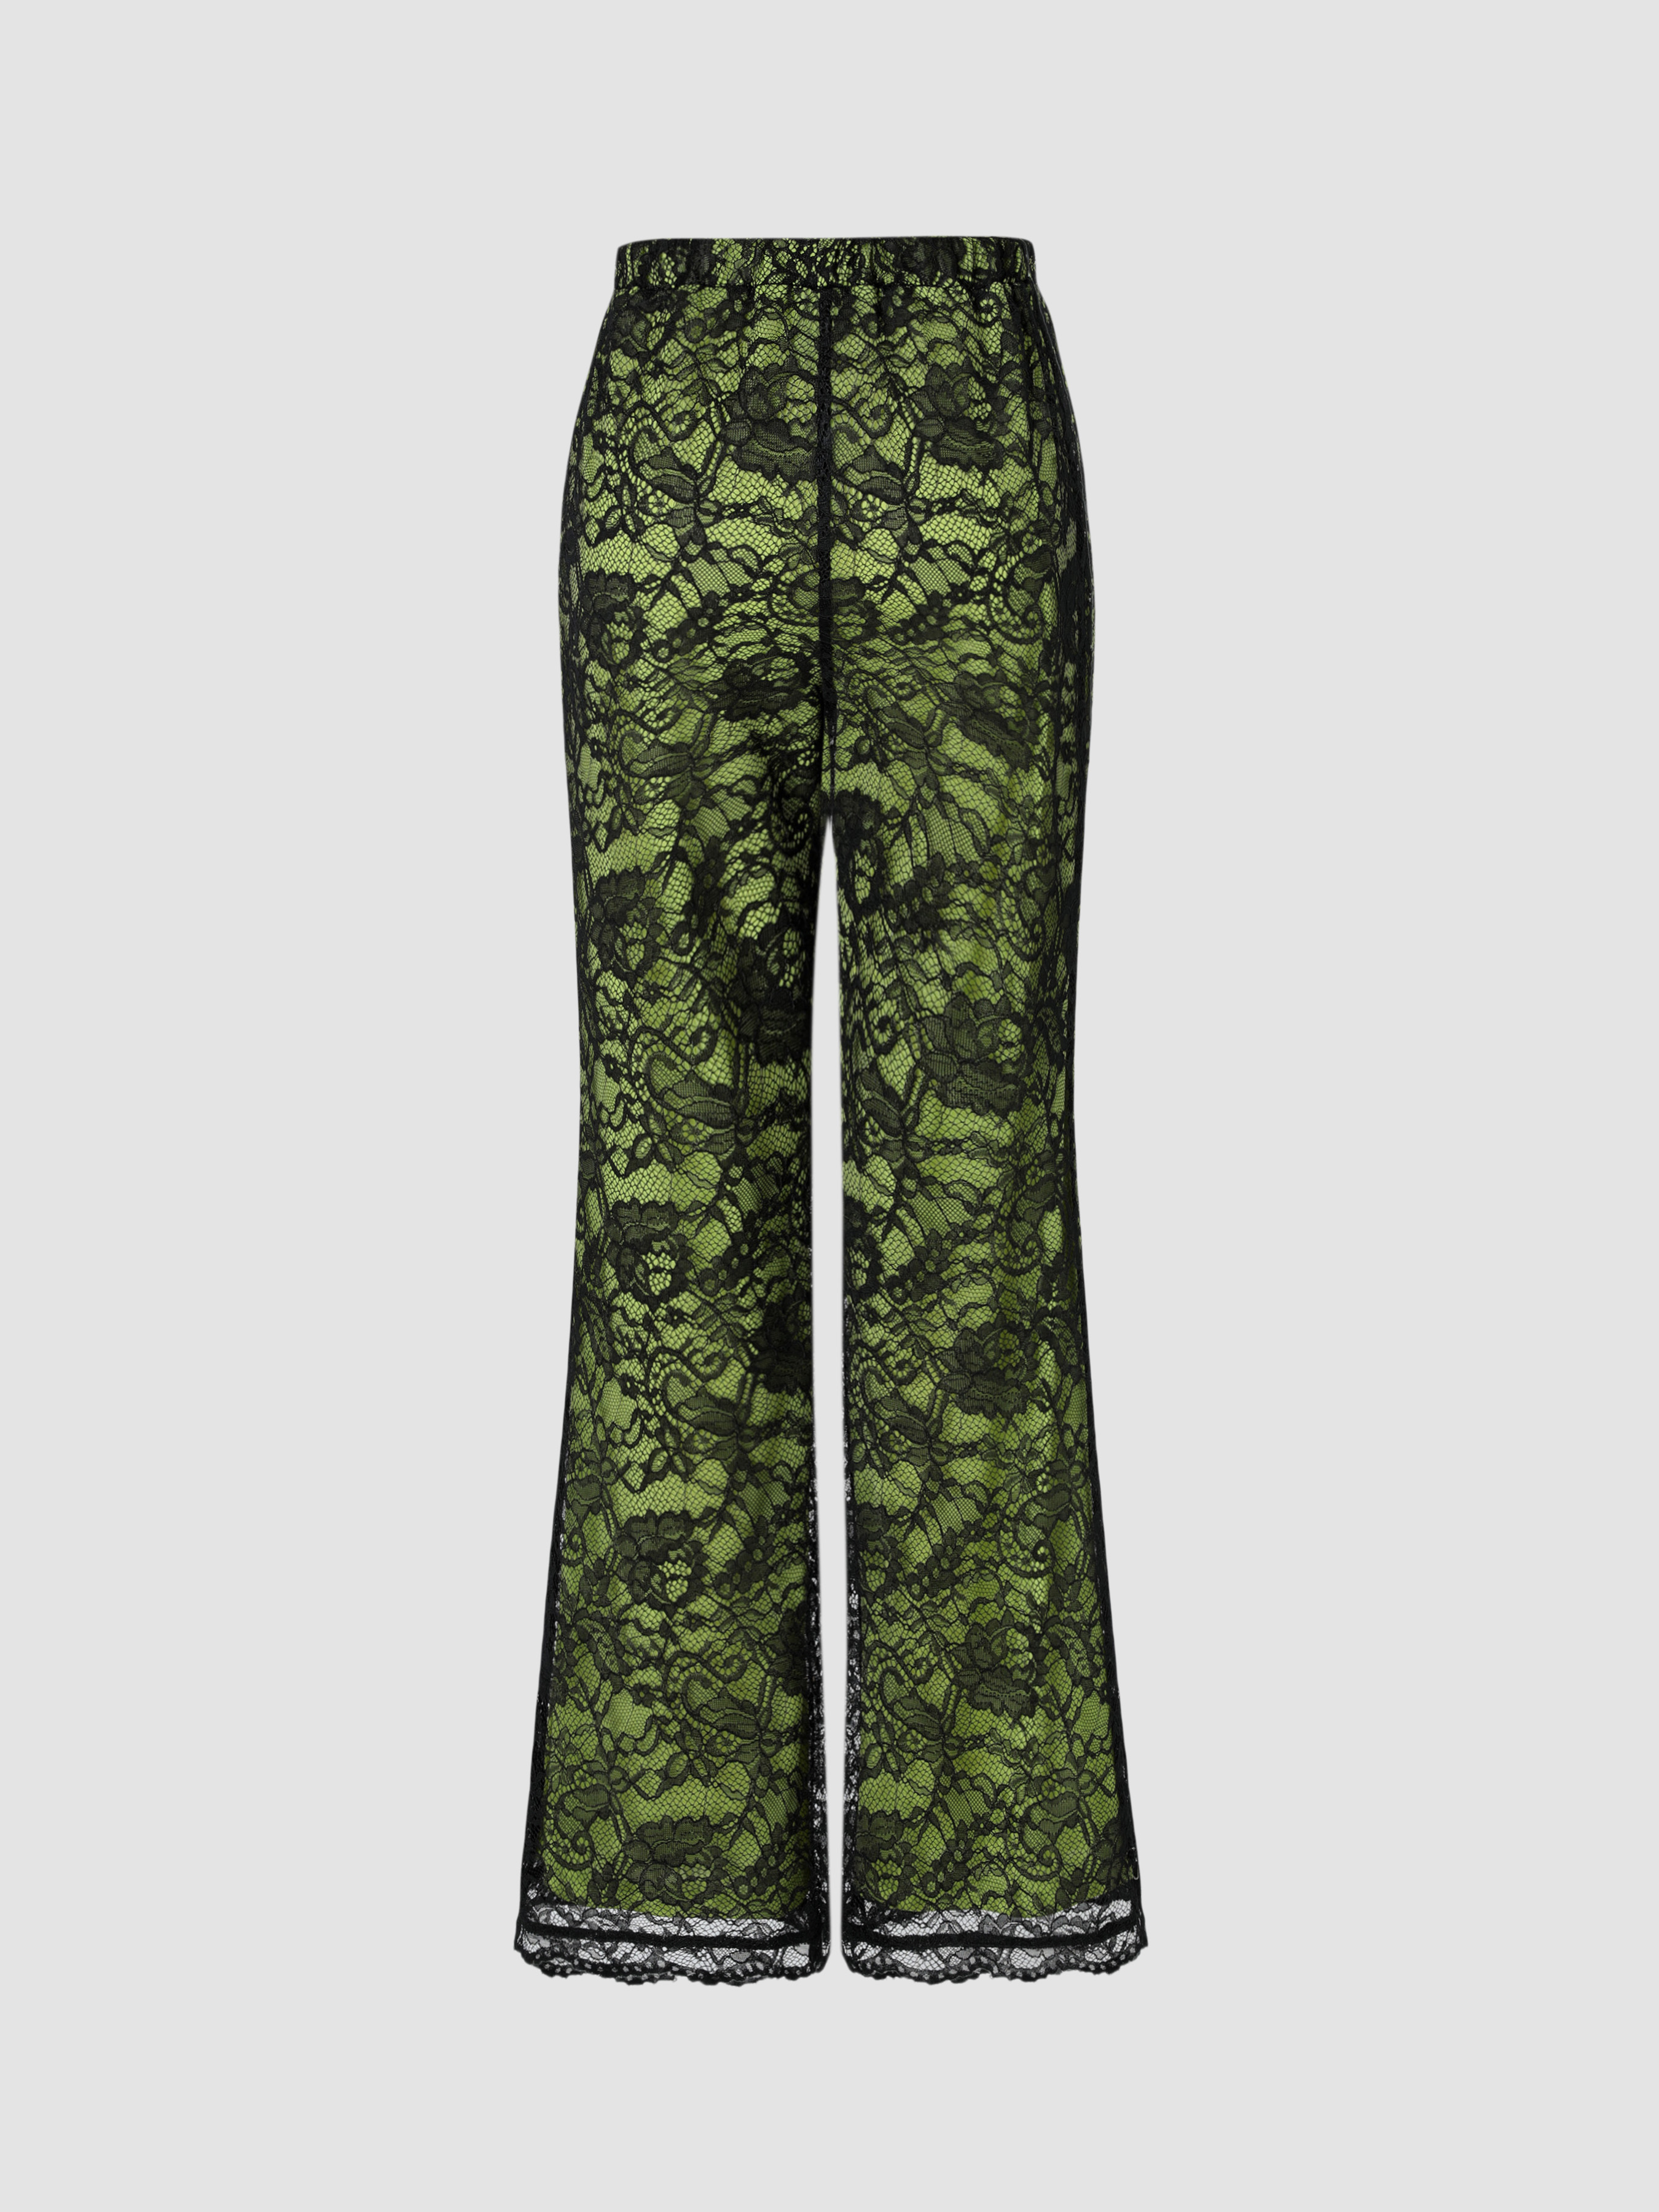 Lace-jersey palazzo trousers, green pattern | MAX&Co.